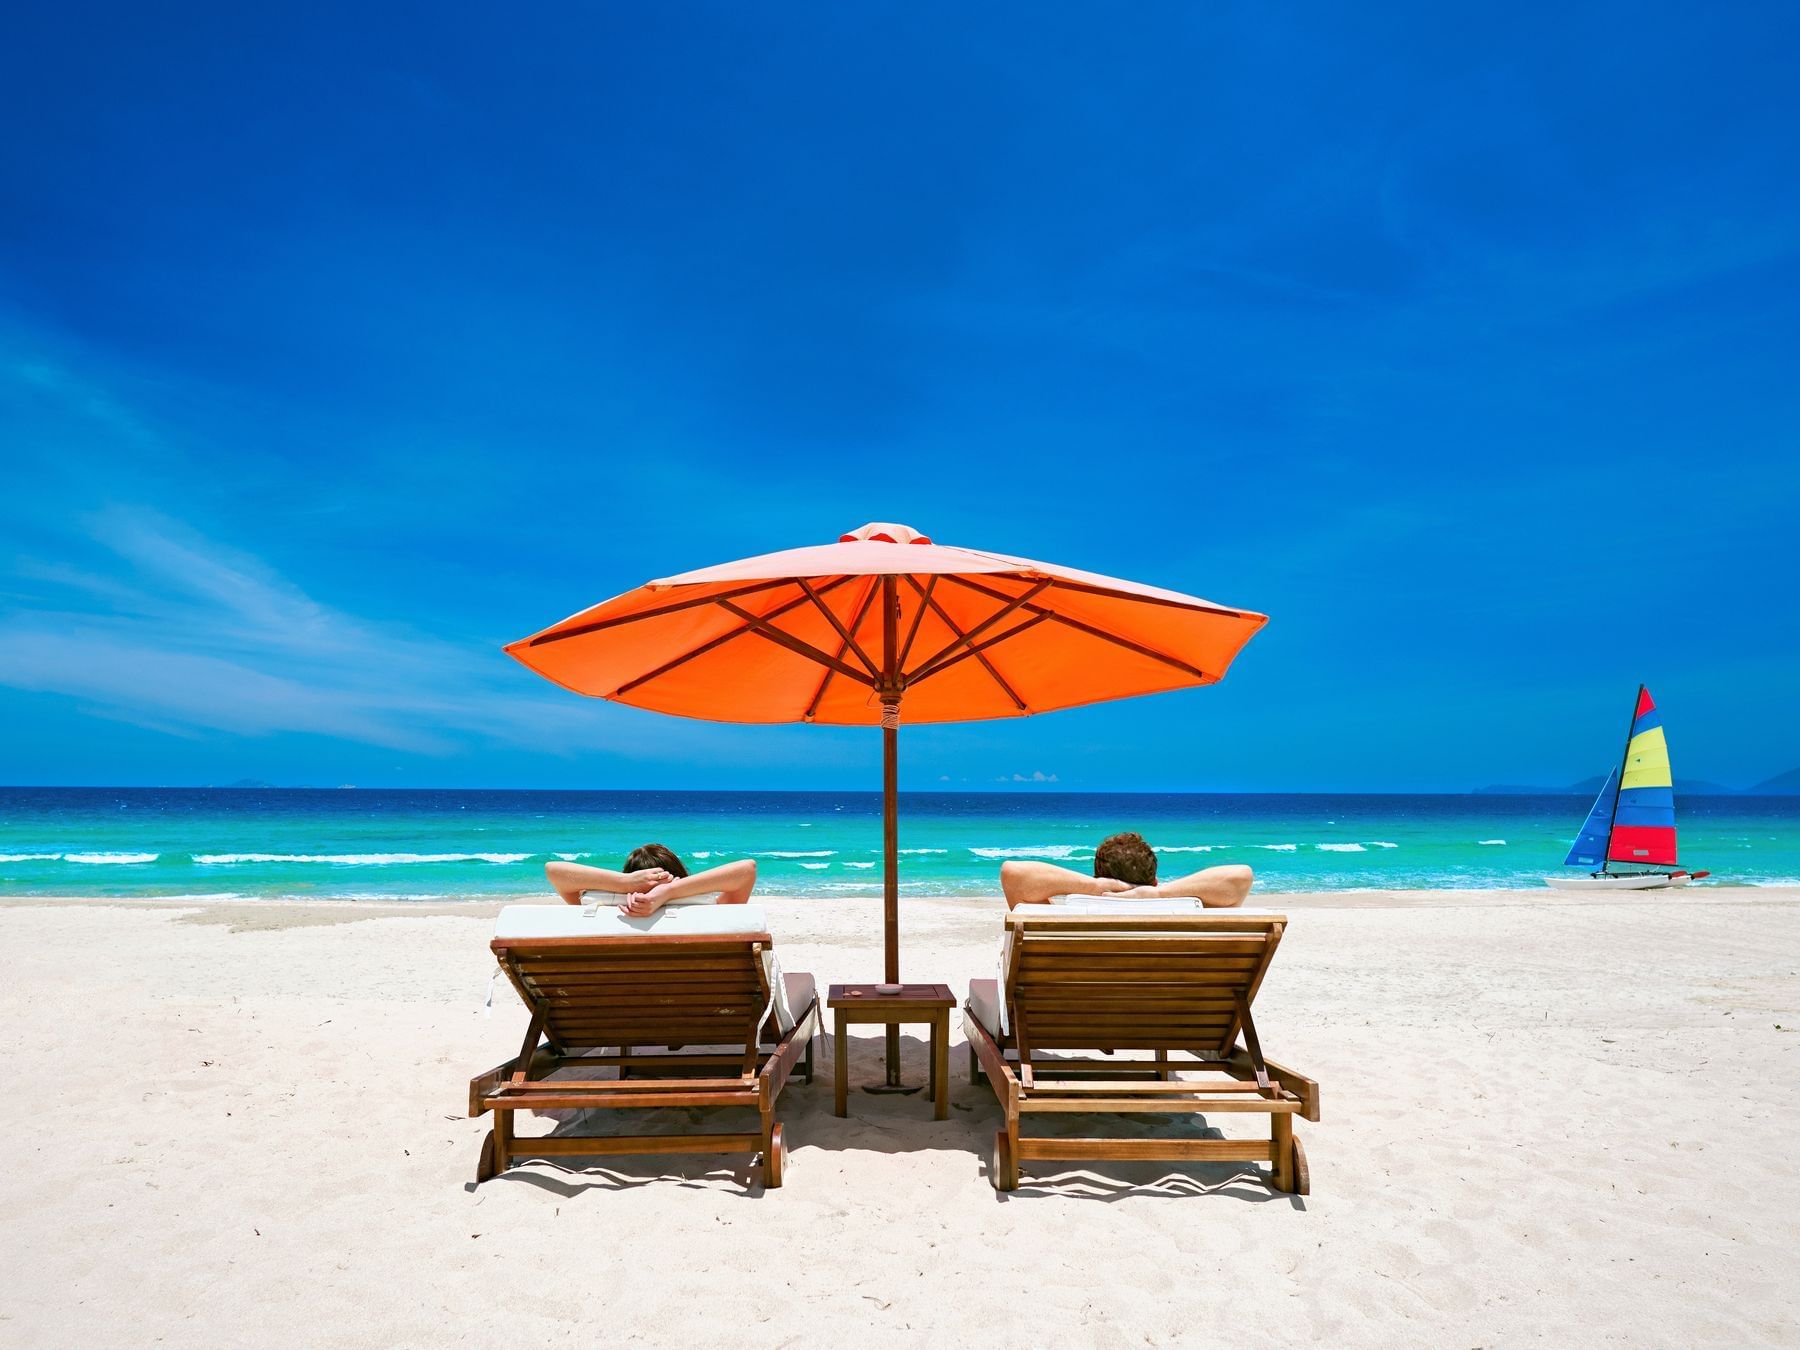 couple lounging under orange umbrella on beach with bright blue skies